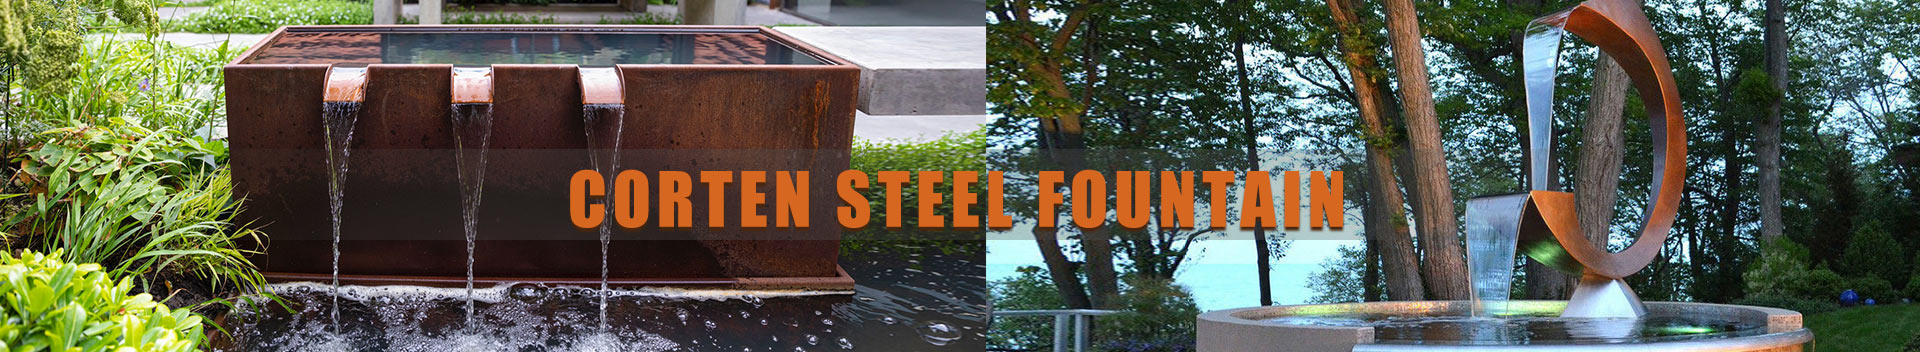 corten Steel Fountain